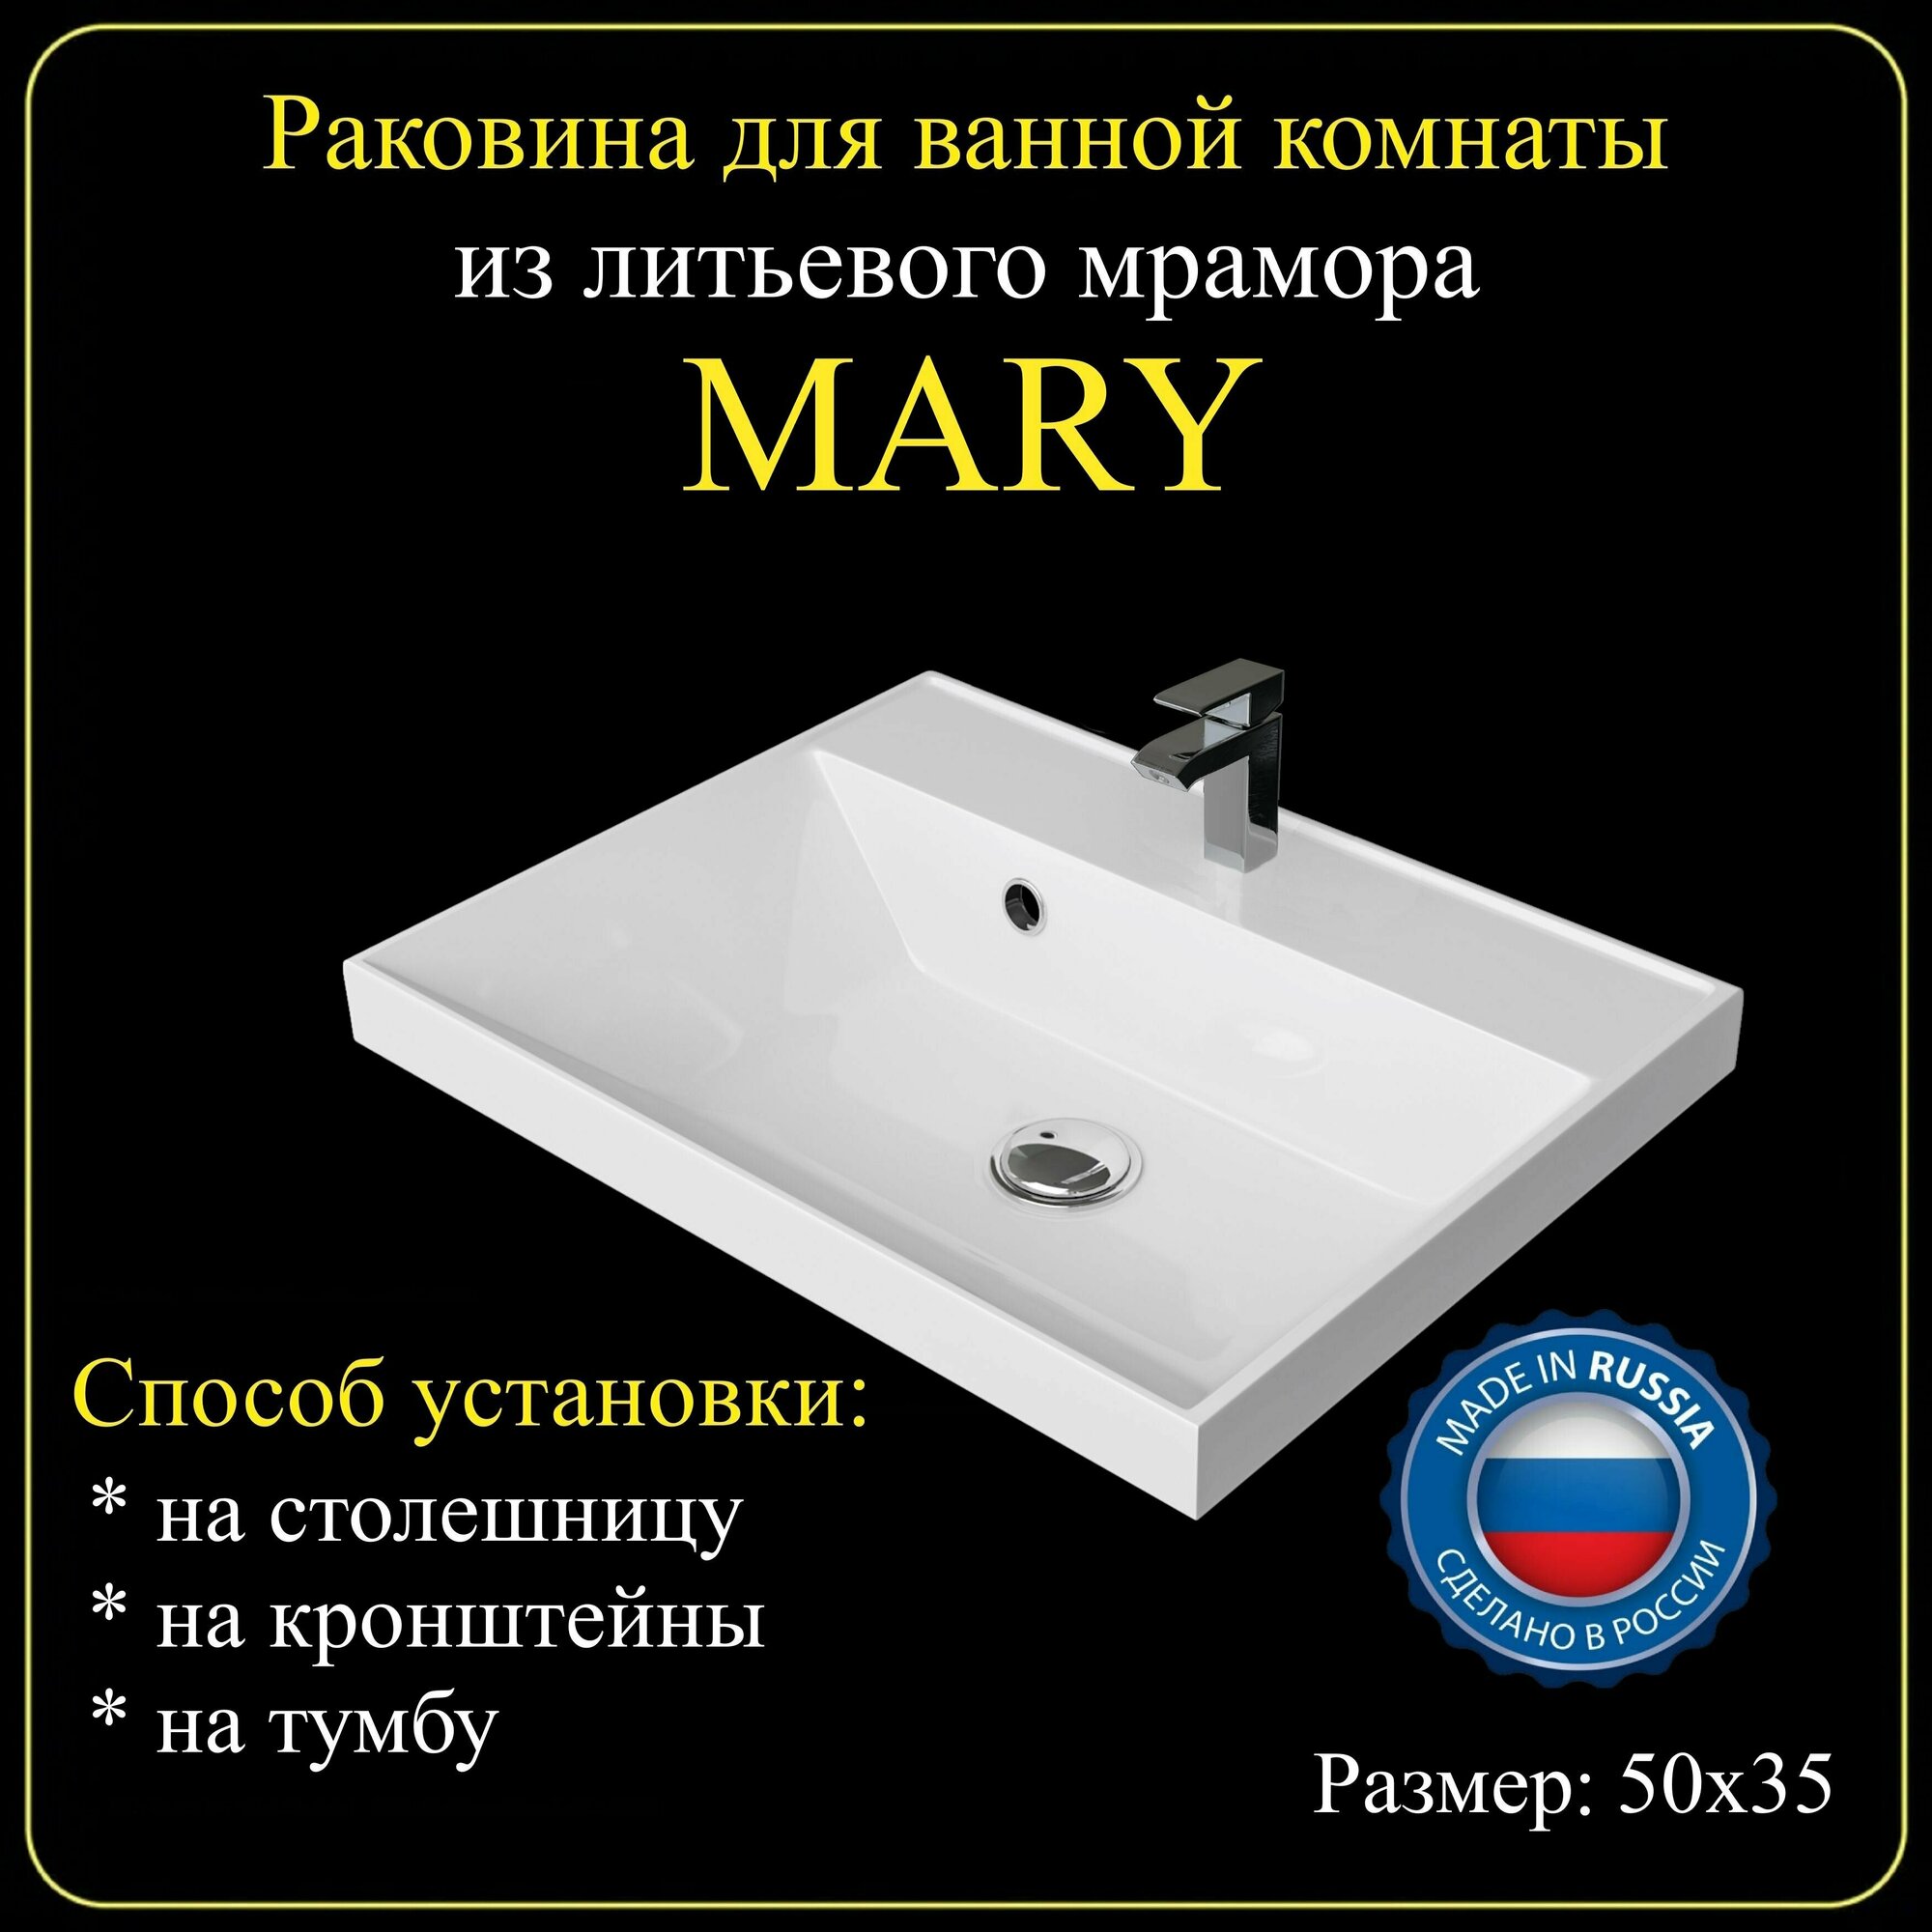 Раковина для ванной комнаты "MARY" 50х35 из литьевого мрамора JOYMY - фотография № 1